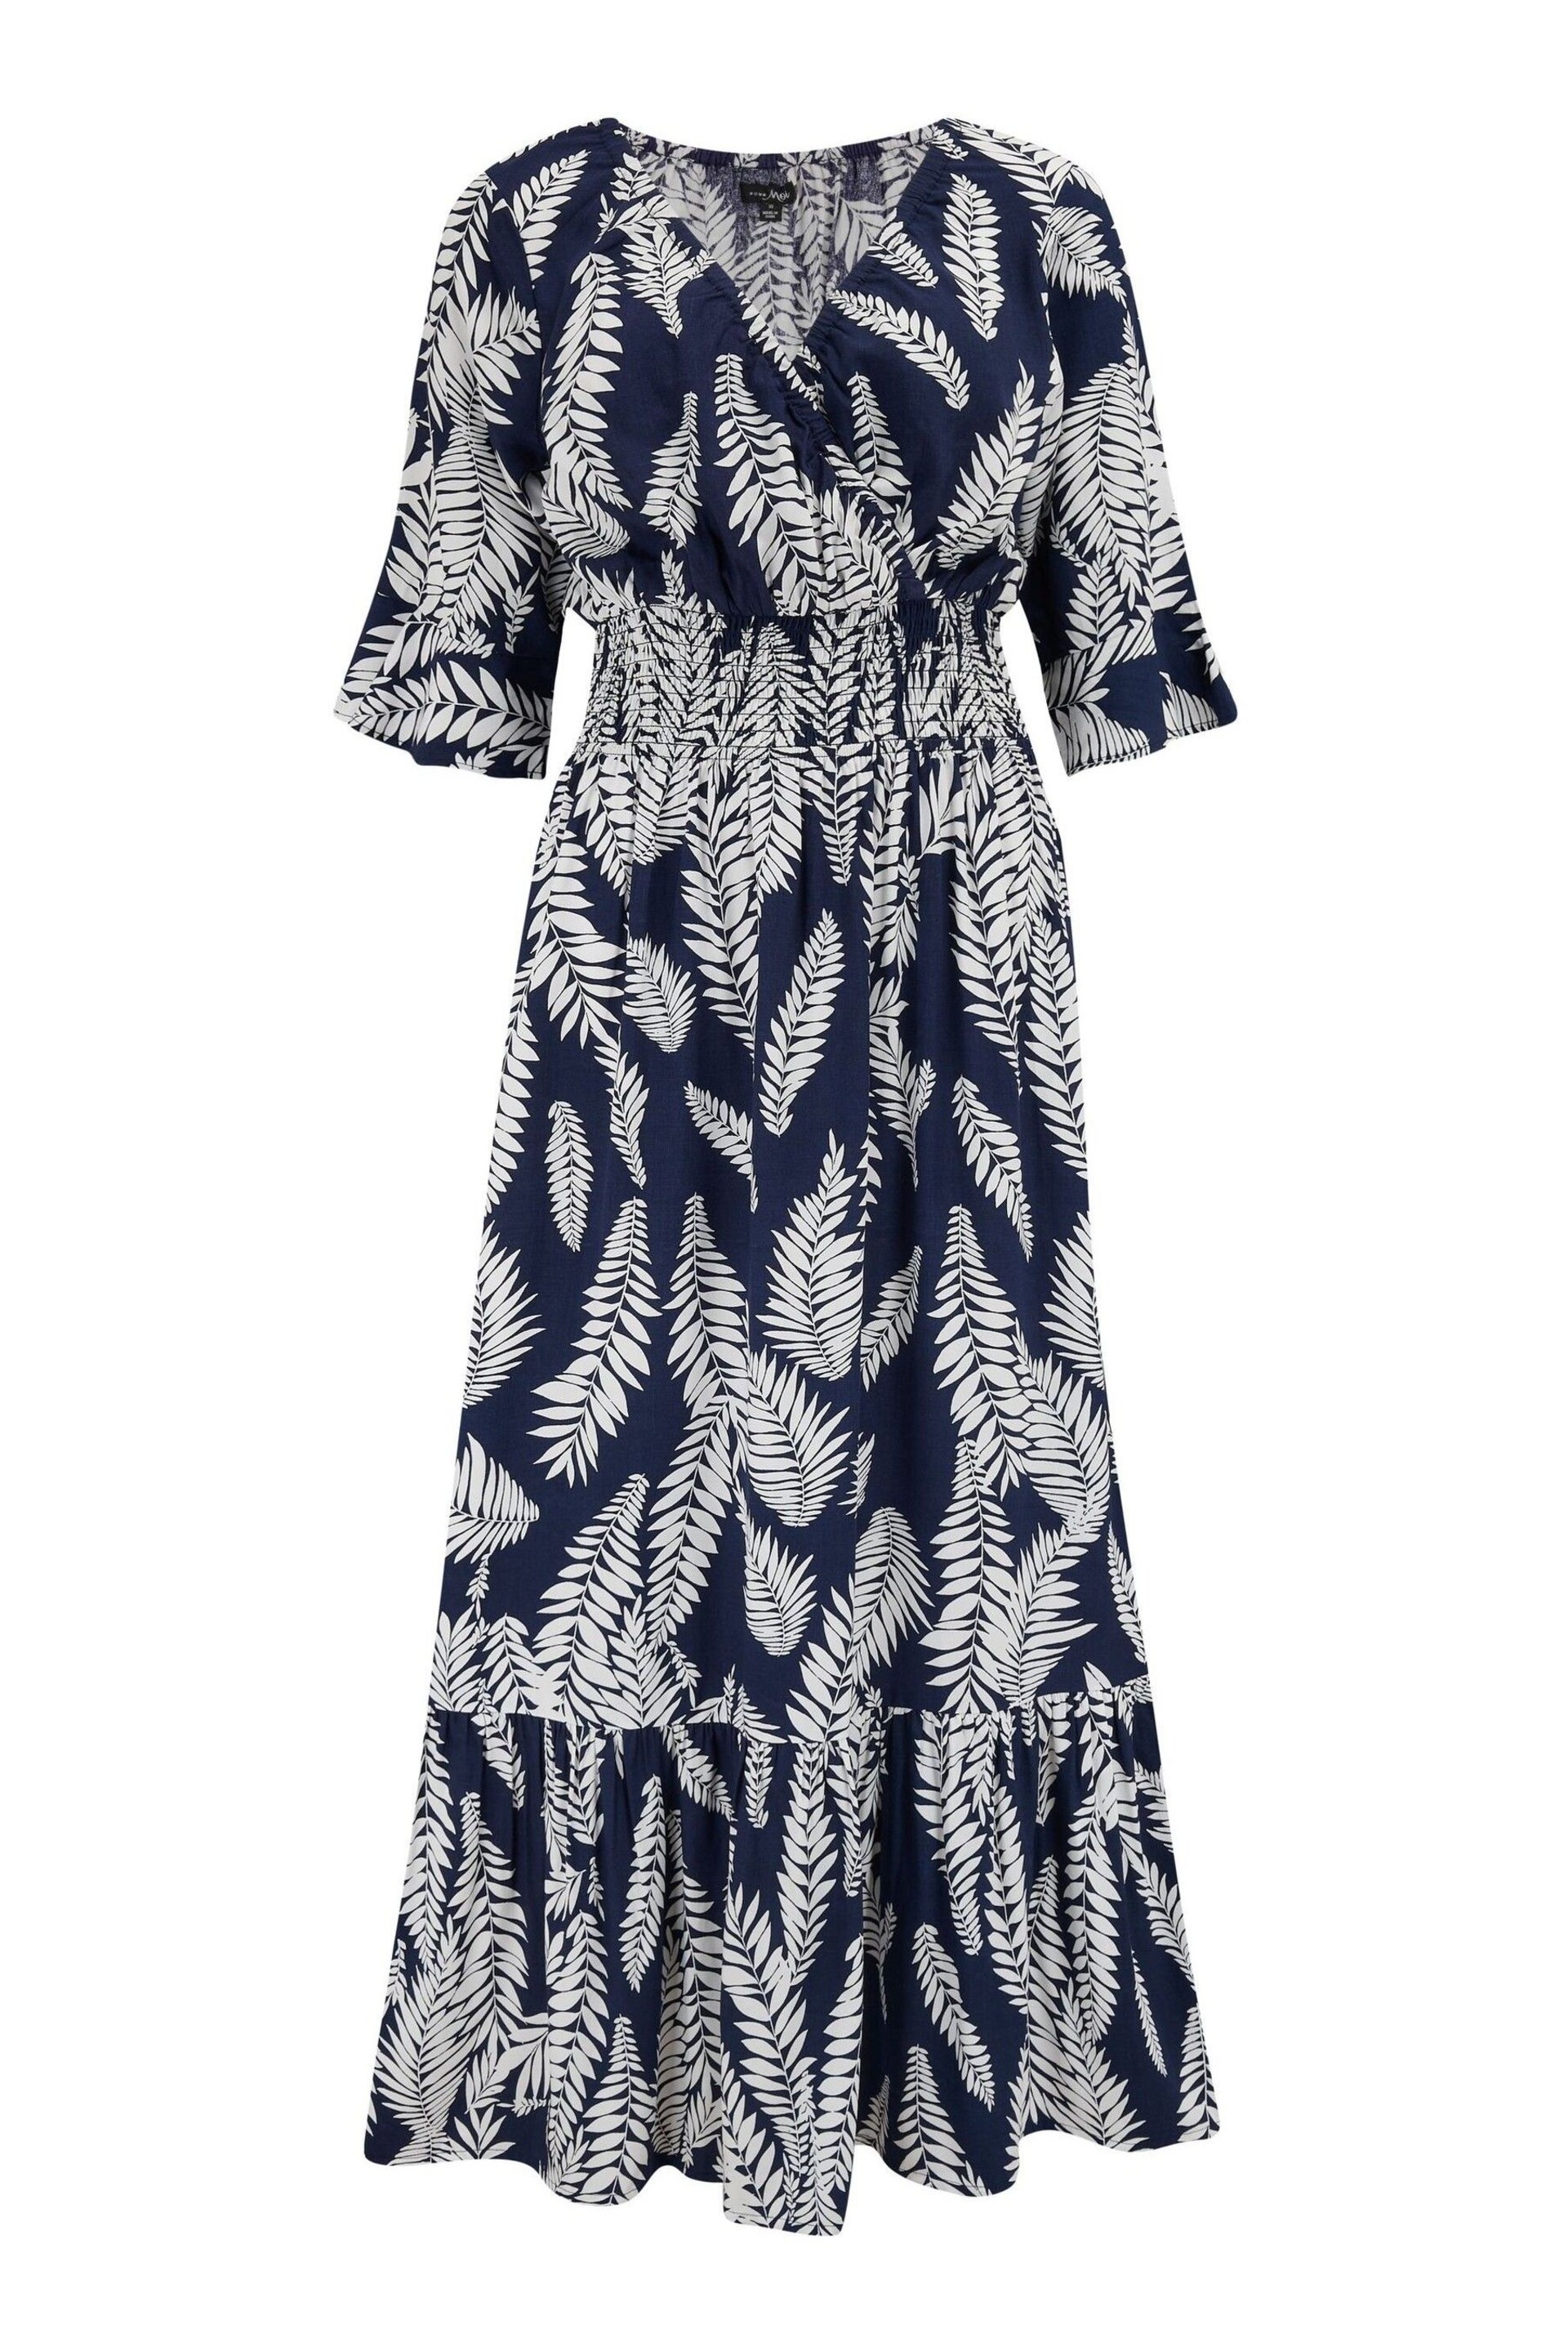 Pour Moi Navy Blue & White Leaf Carmen Fuller Bust LENZING™ ECOVERO™ Viscose Elasticated Neckline Midaxi Dress - Image 3 of 4